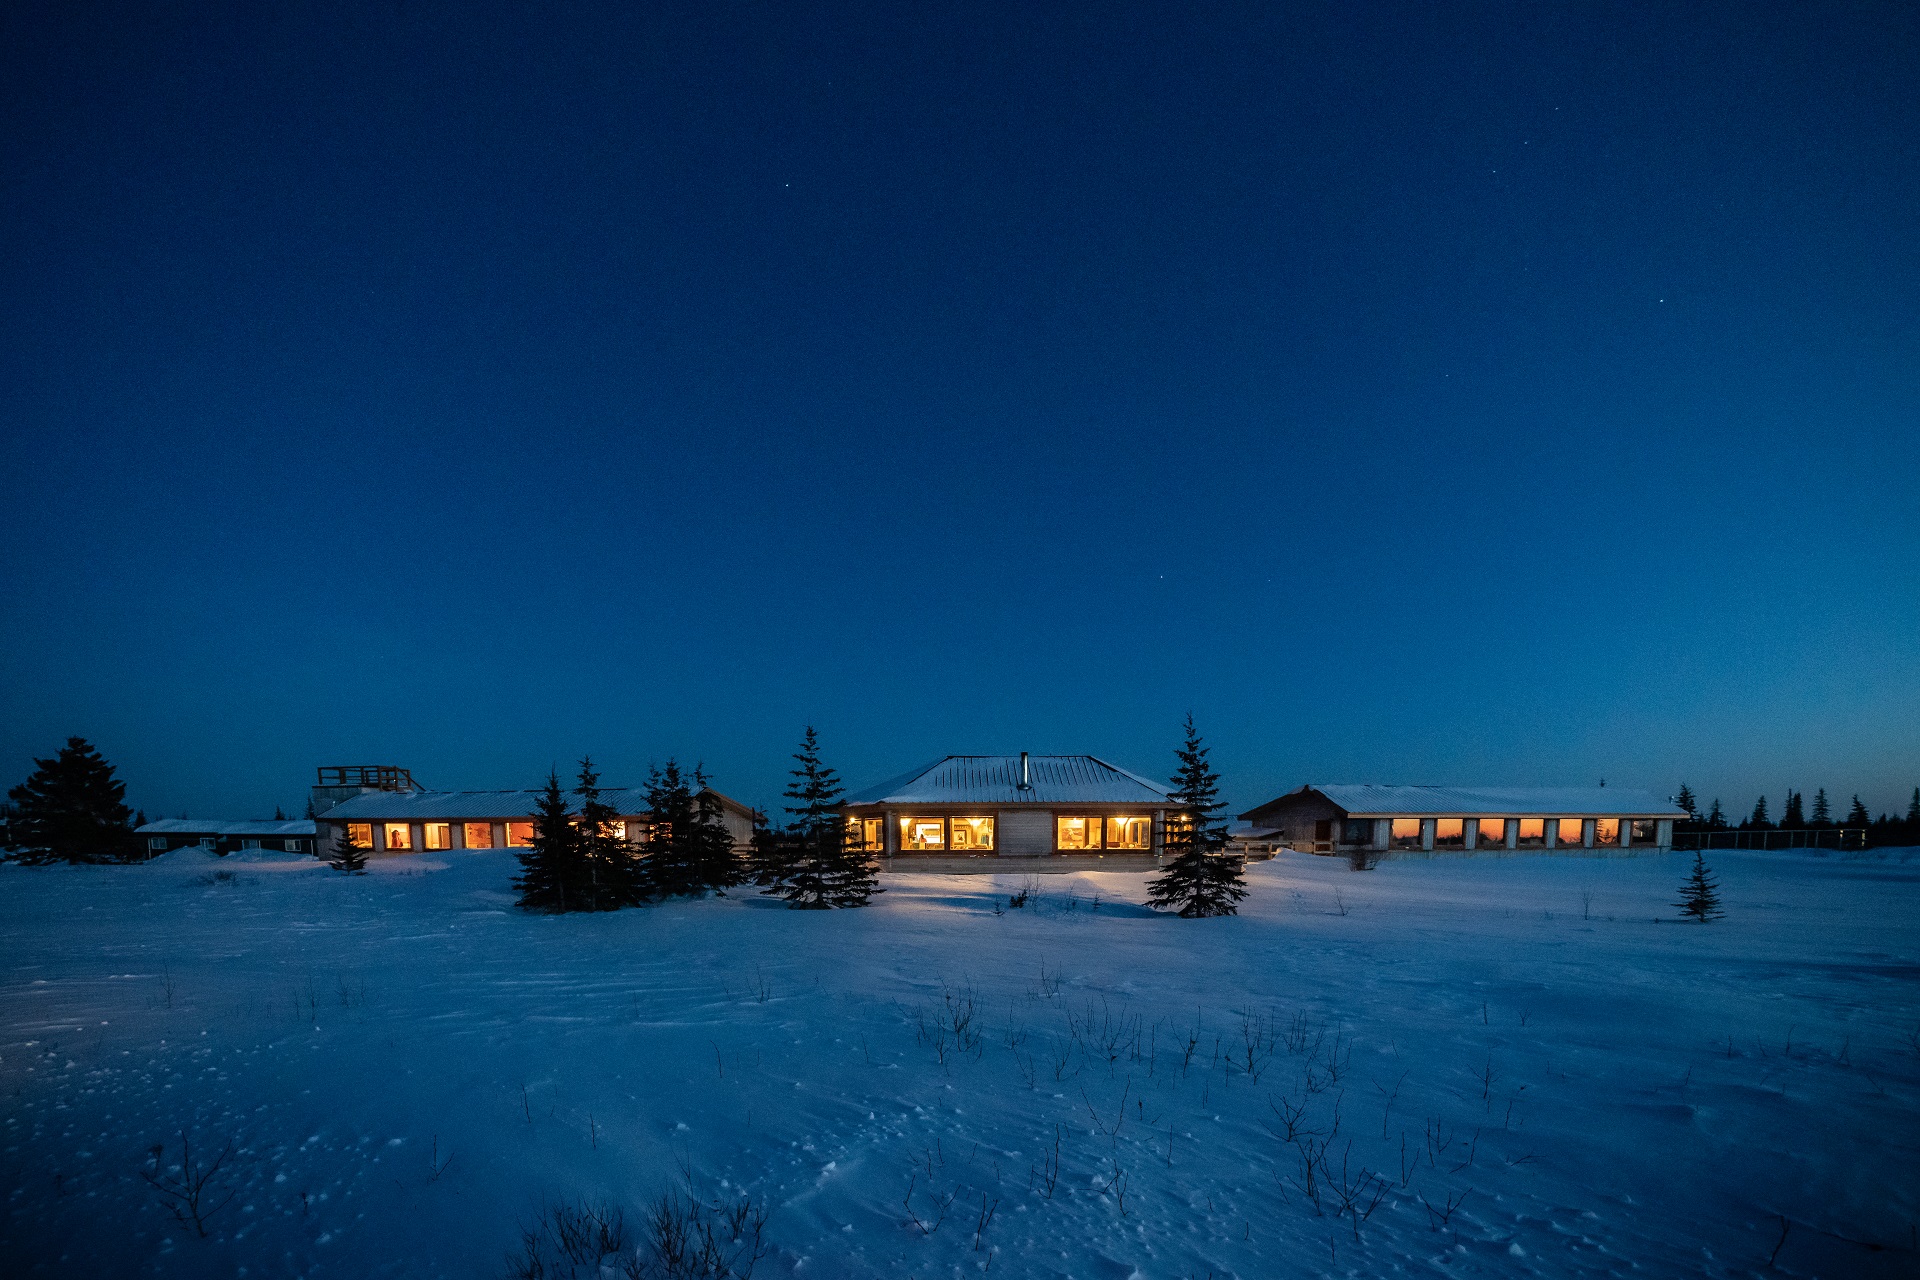 Blue hour at Nanuk Polar Bear Lodge. Fabienne Jansen photo.